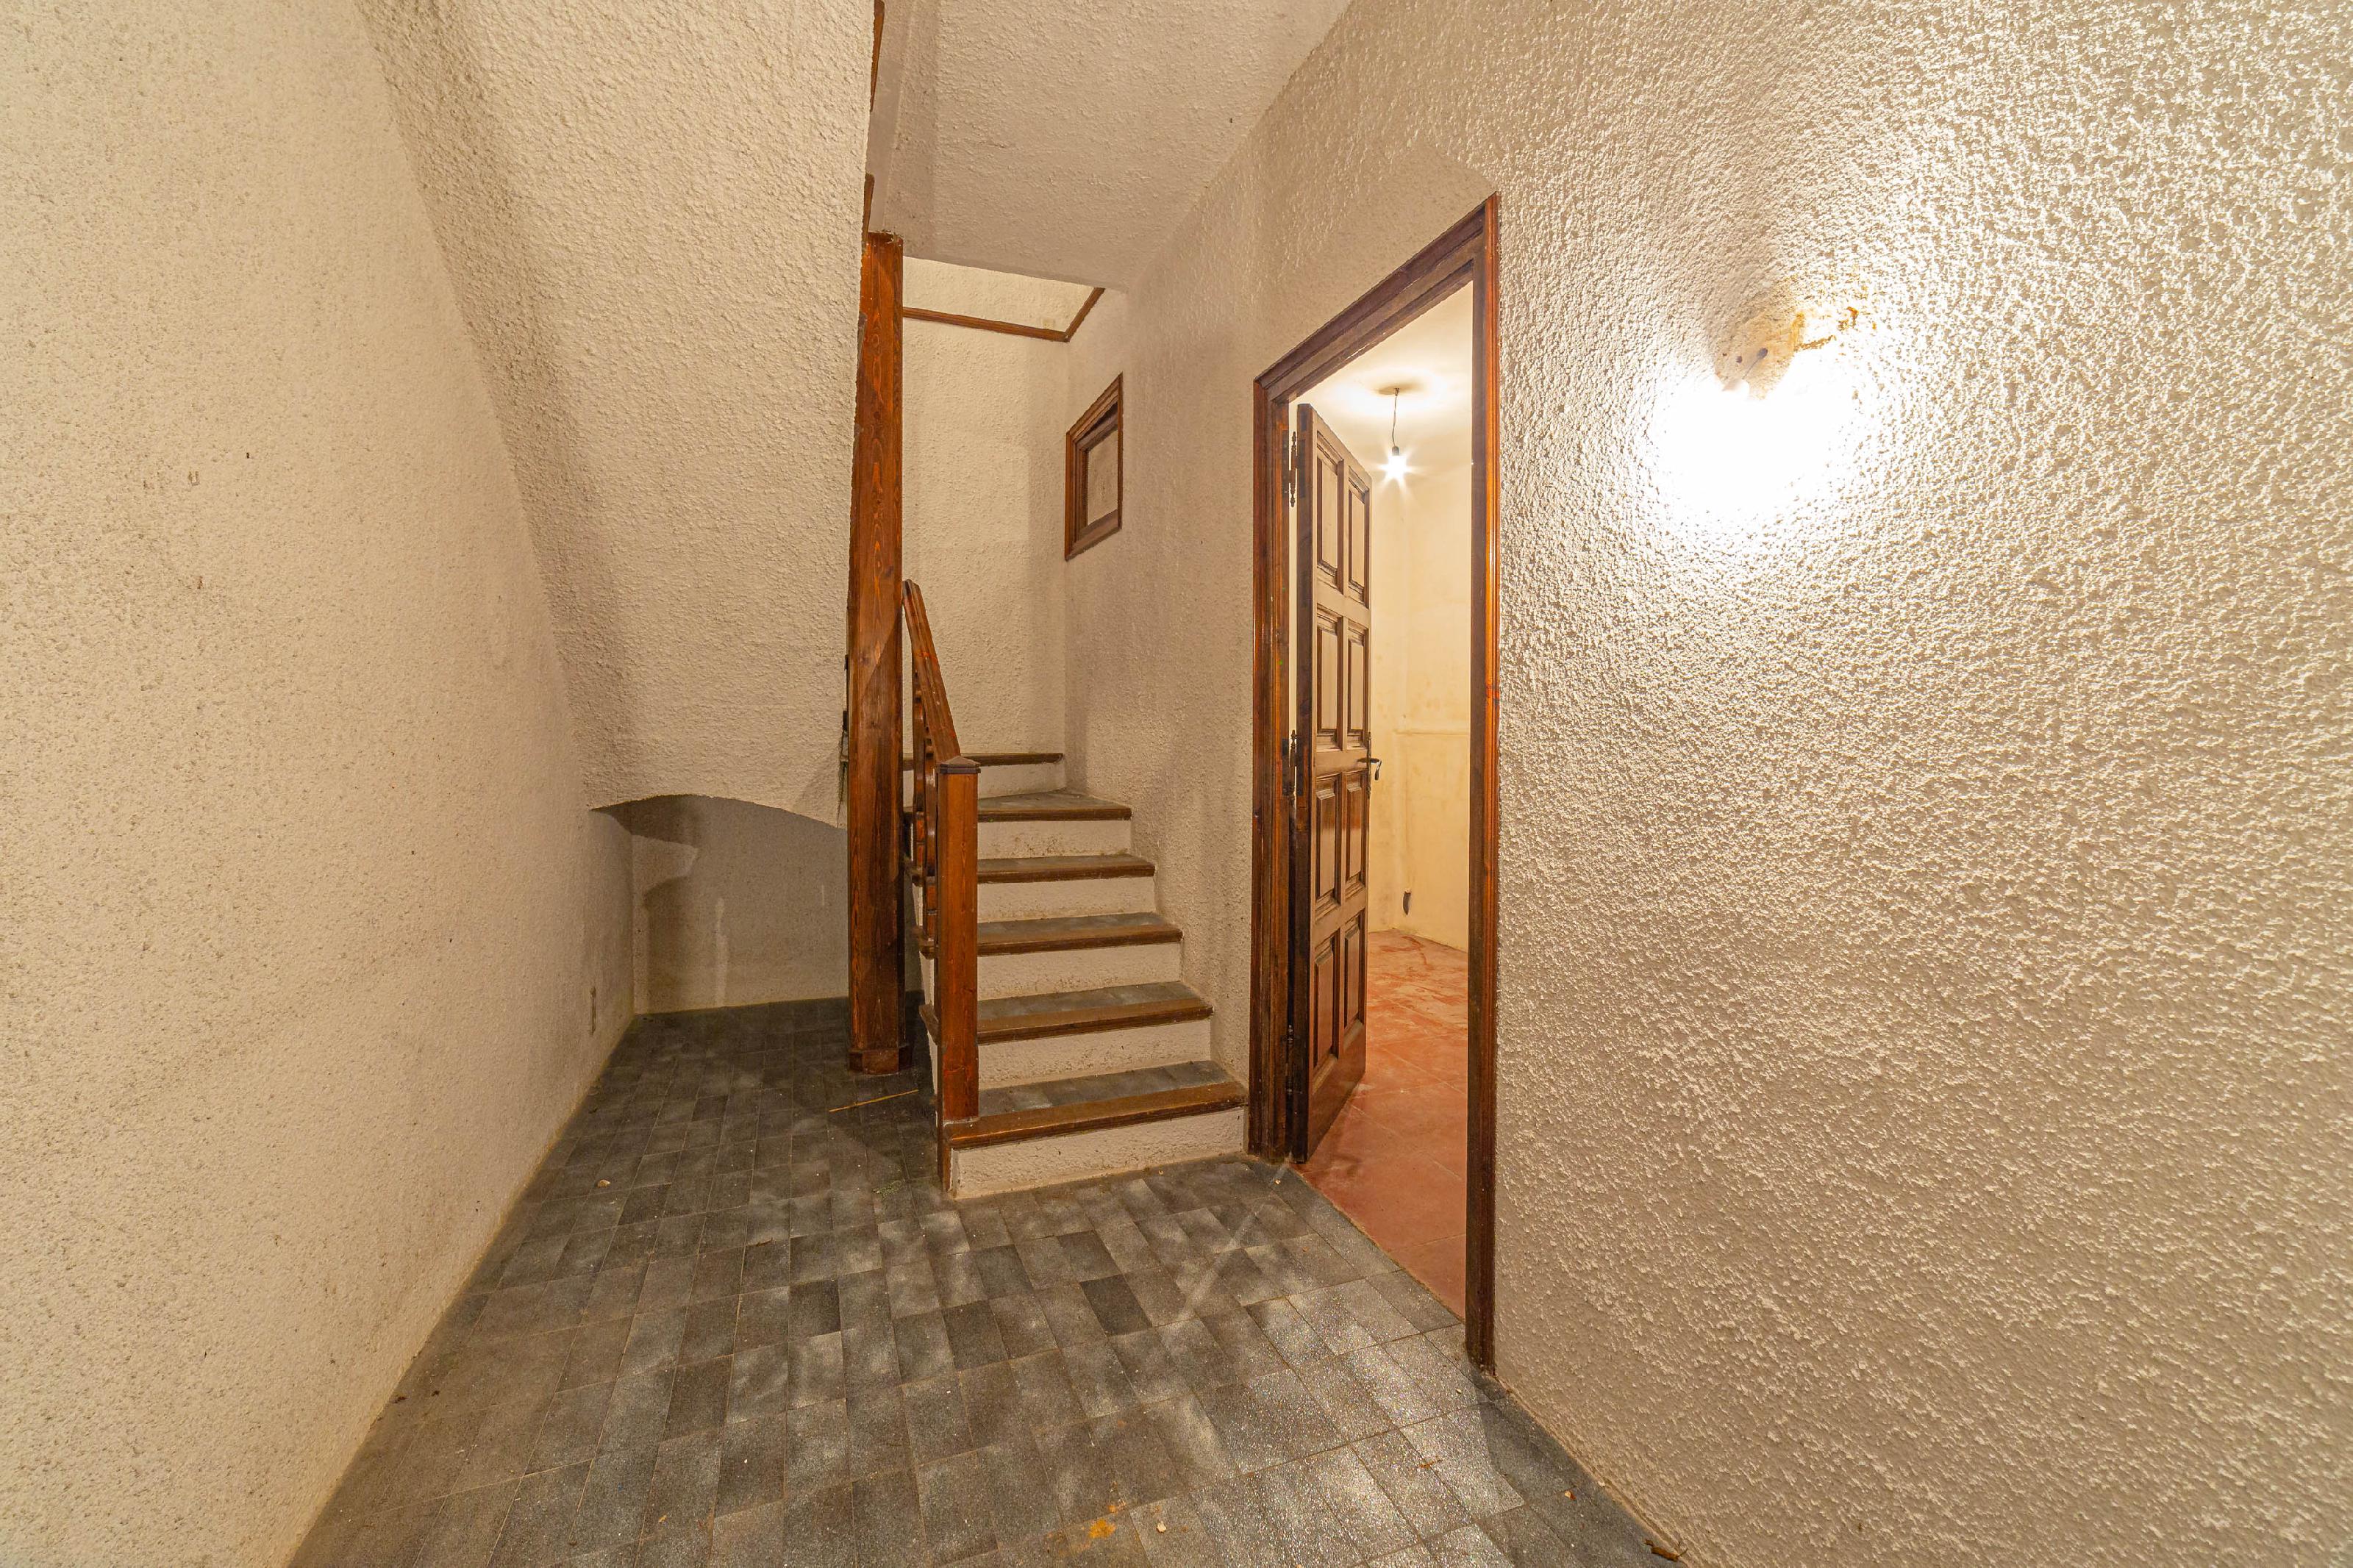 268376 Detached House for sale in La Roca del Vallès 30